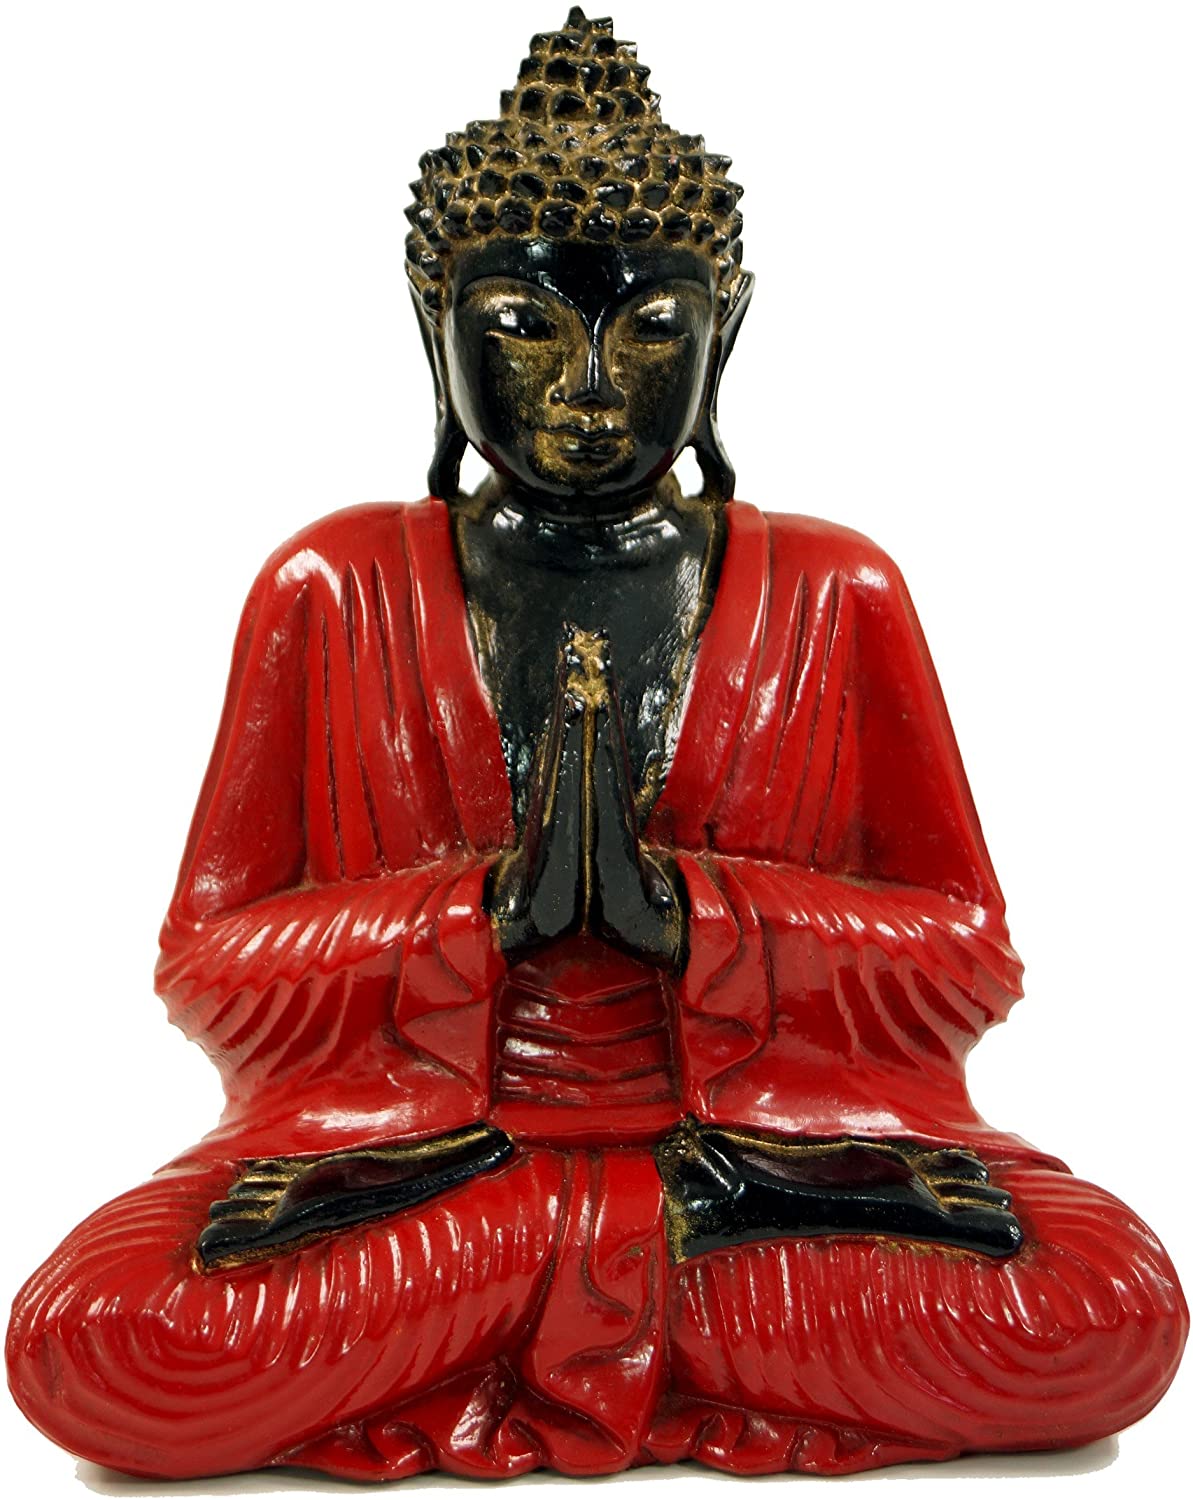 GURU SHOP Carved Sitting Buddha in Anjali Mudra, Red, 30 x 25 x 13 cm, Buddhas